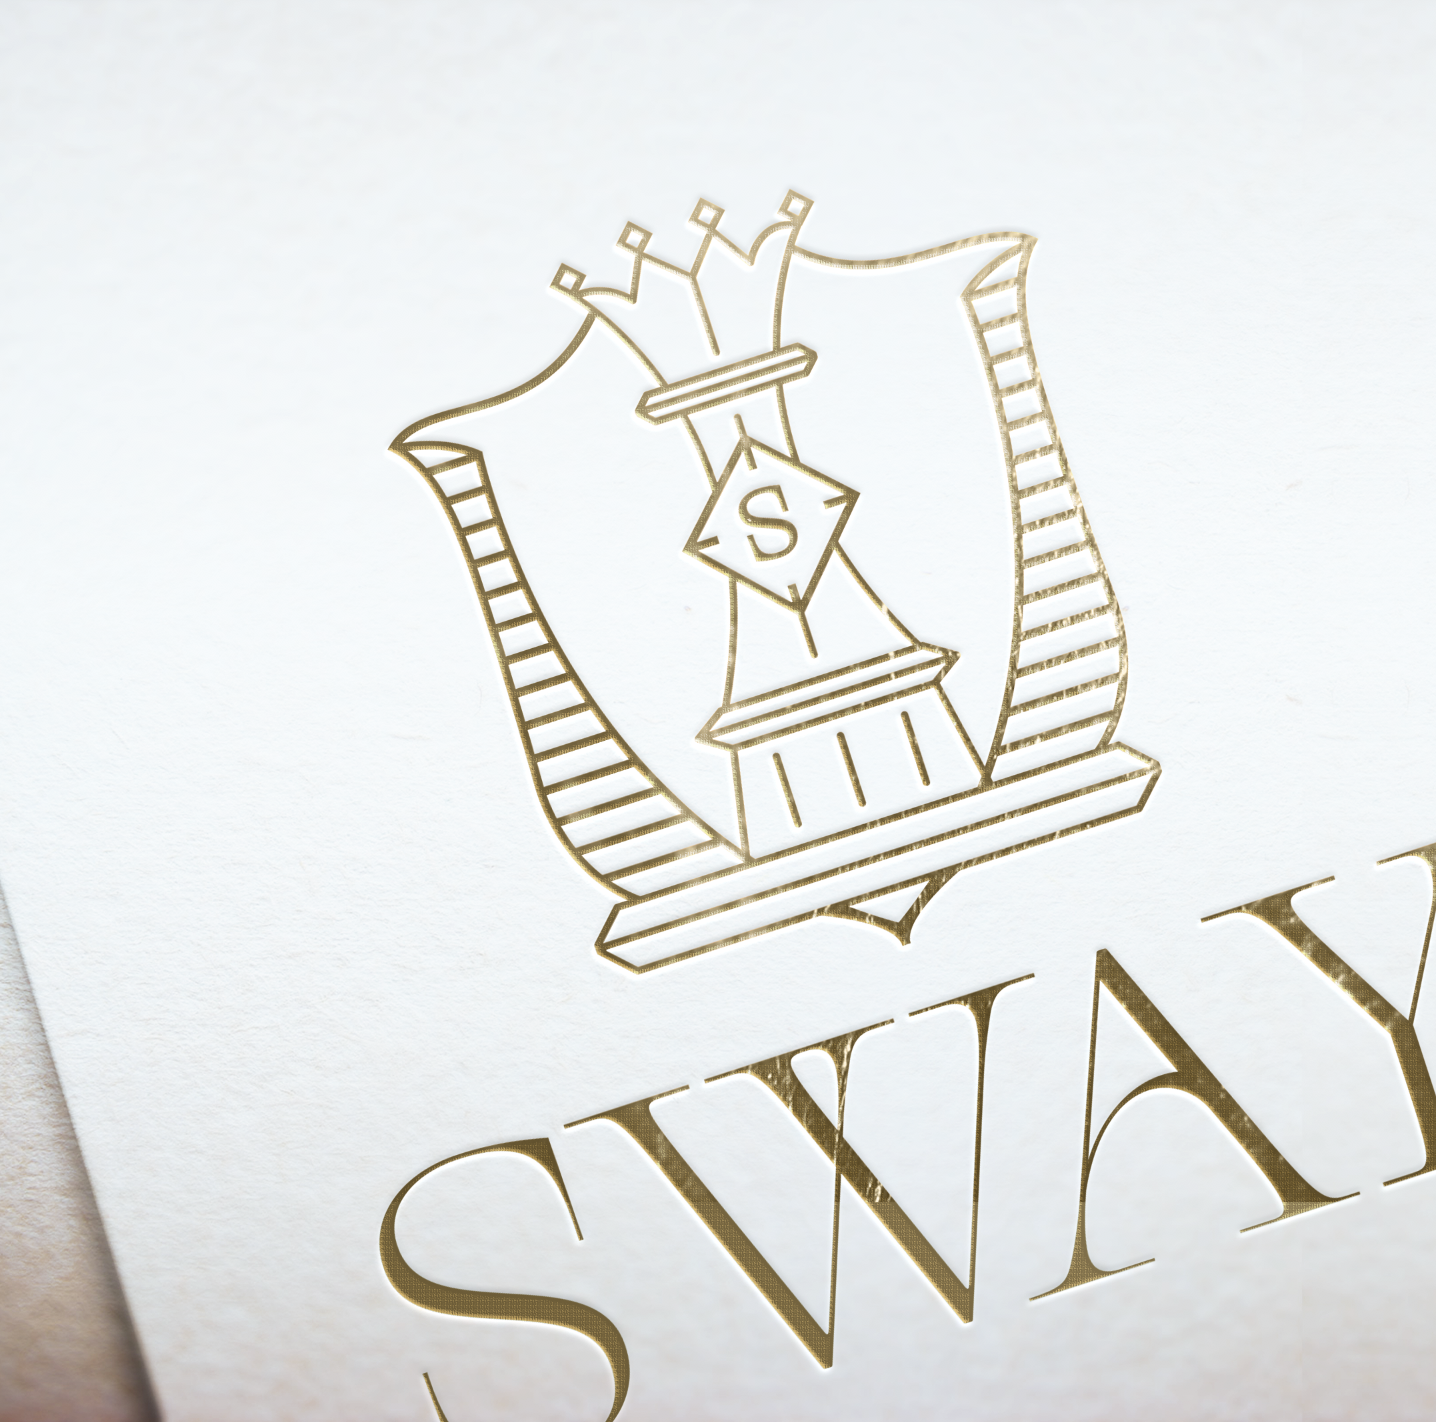 luxury logo design